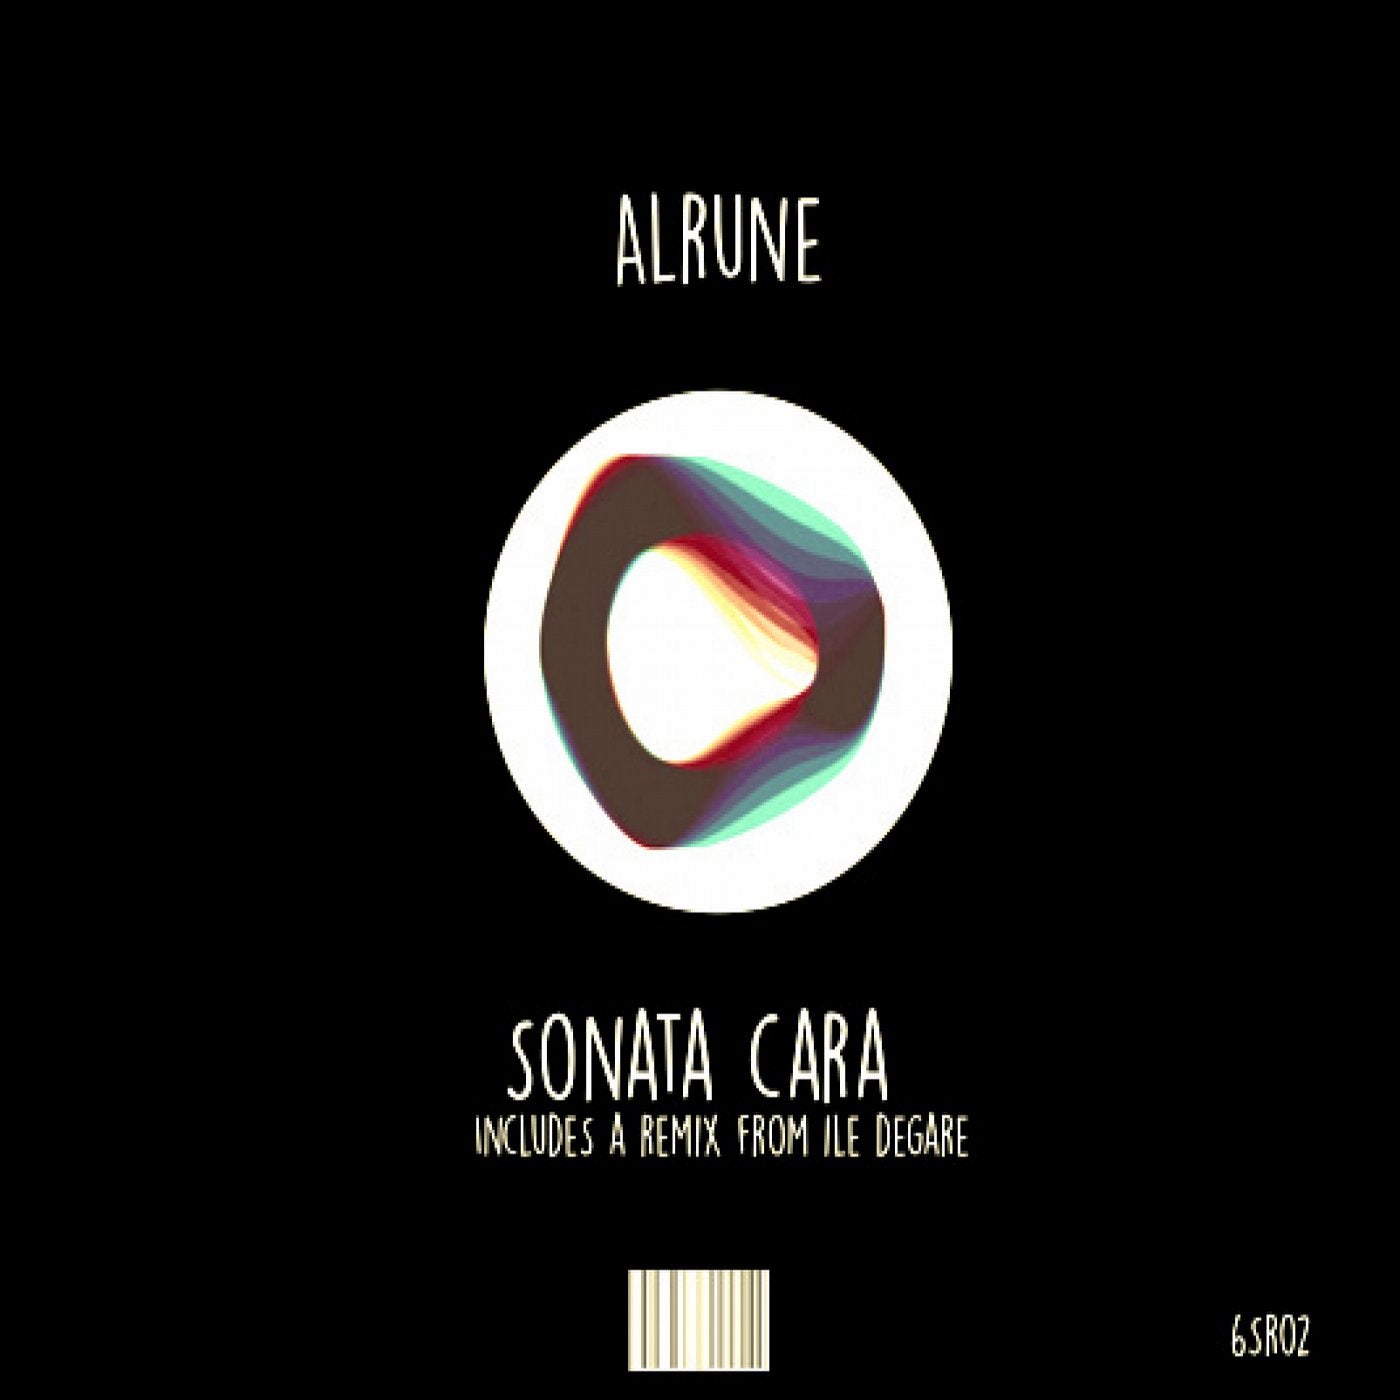 Sonata Cara